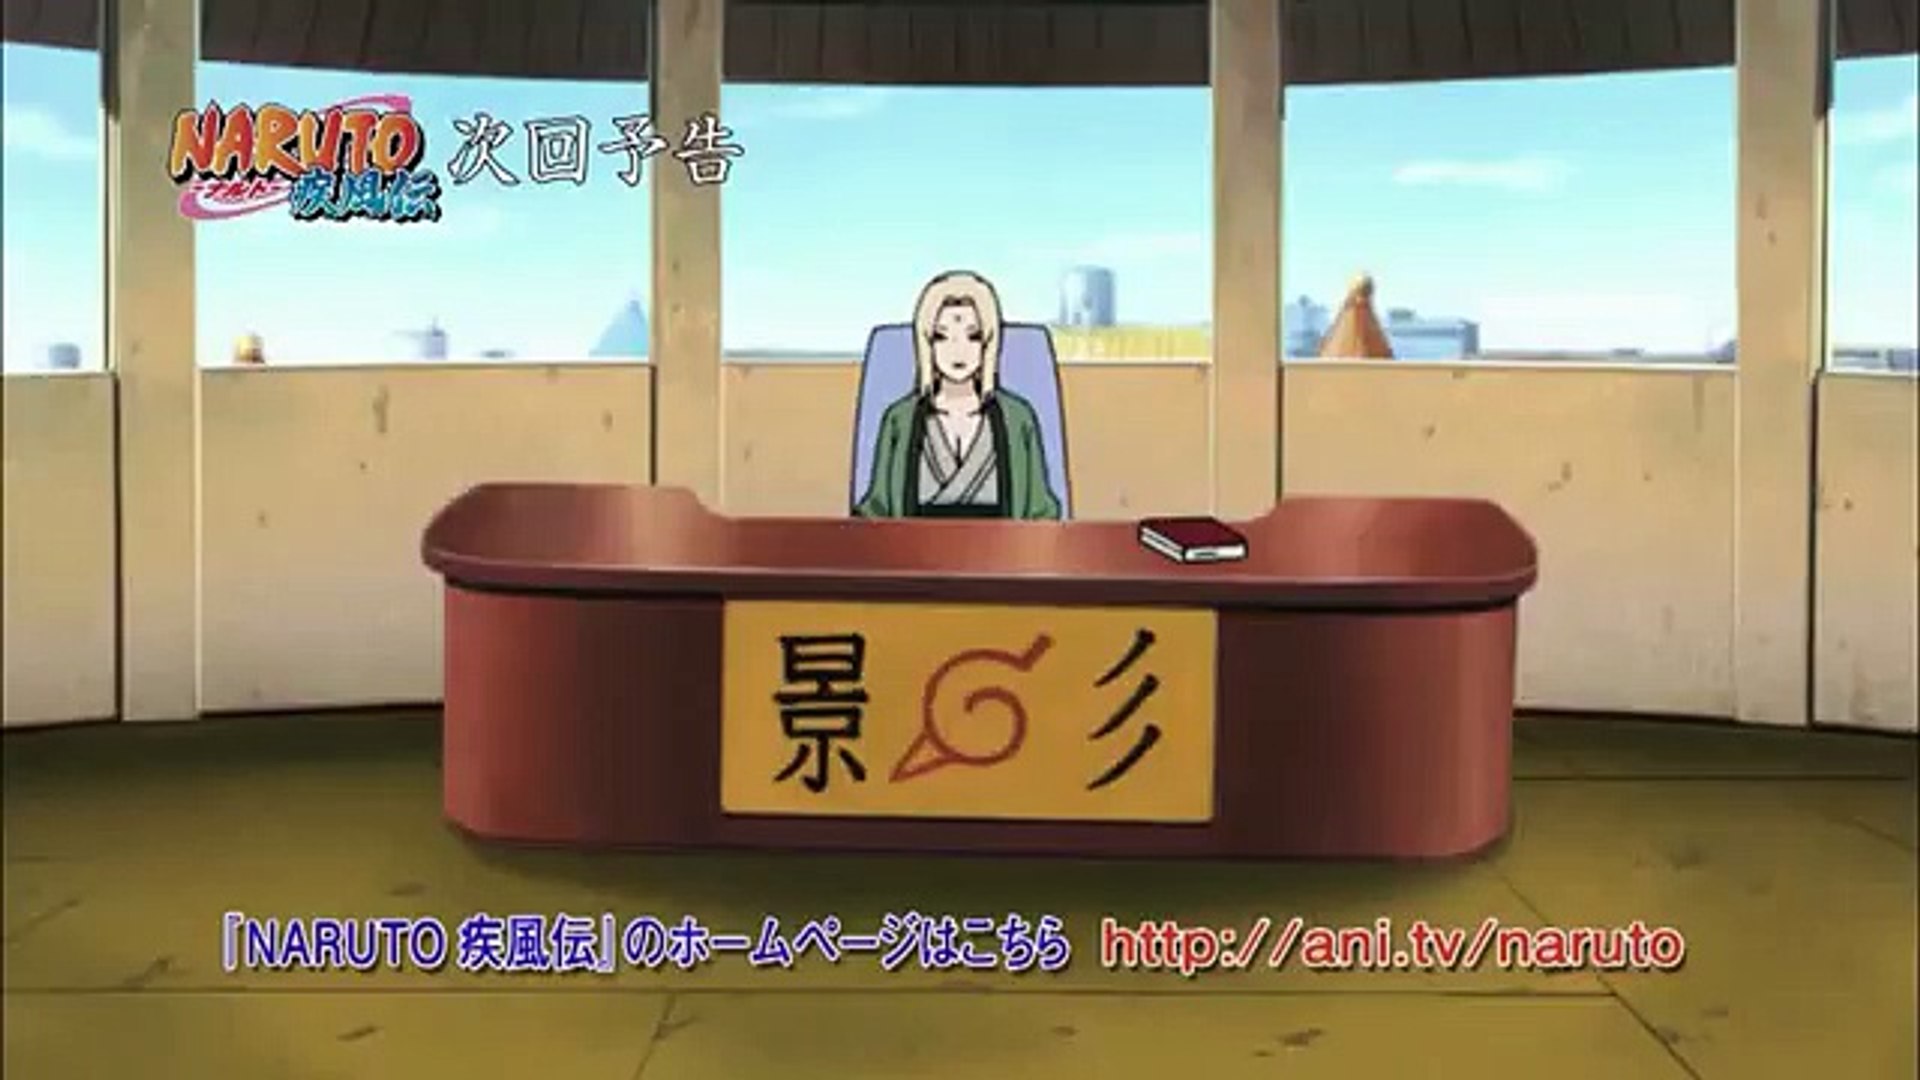 Naruto Shippuden Episode 449 Preview - video Dailymotion